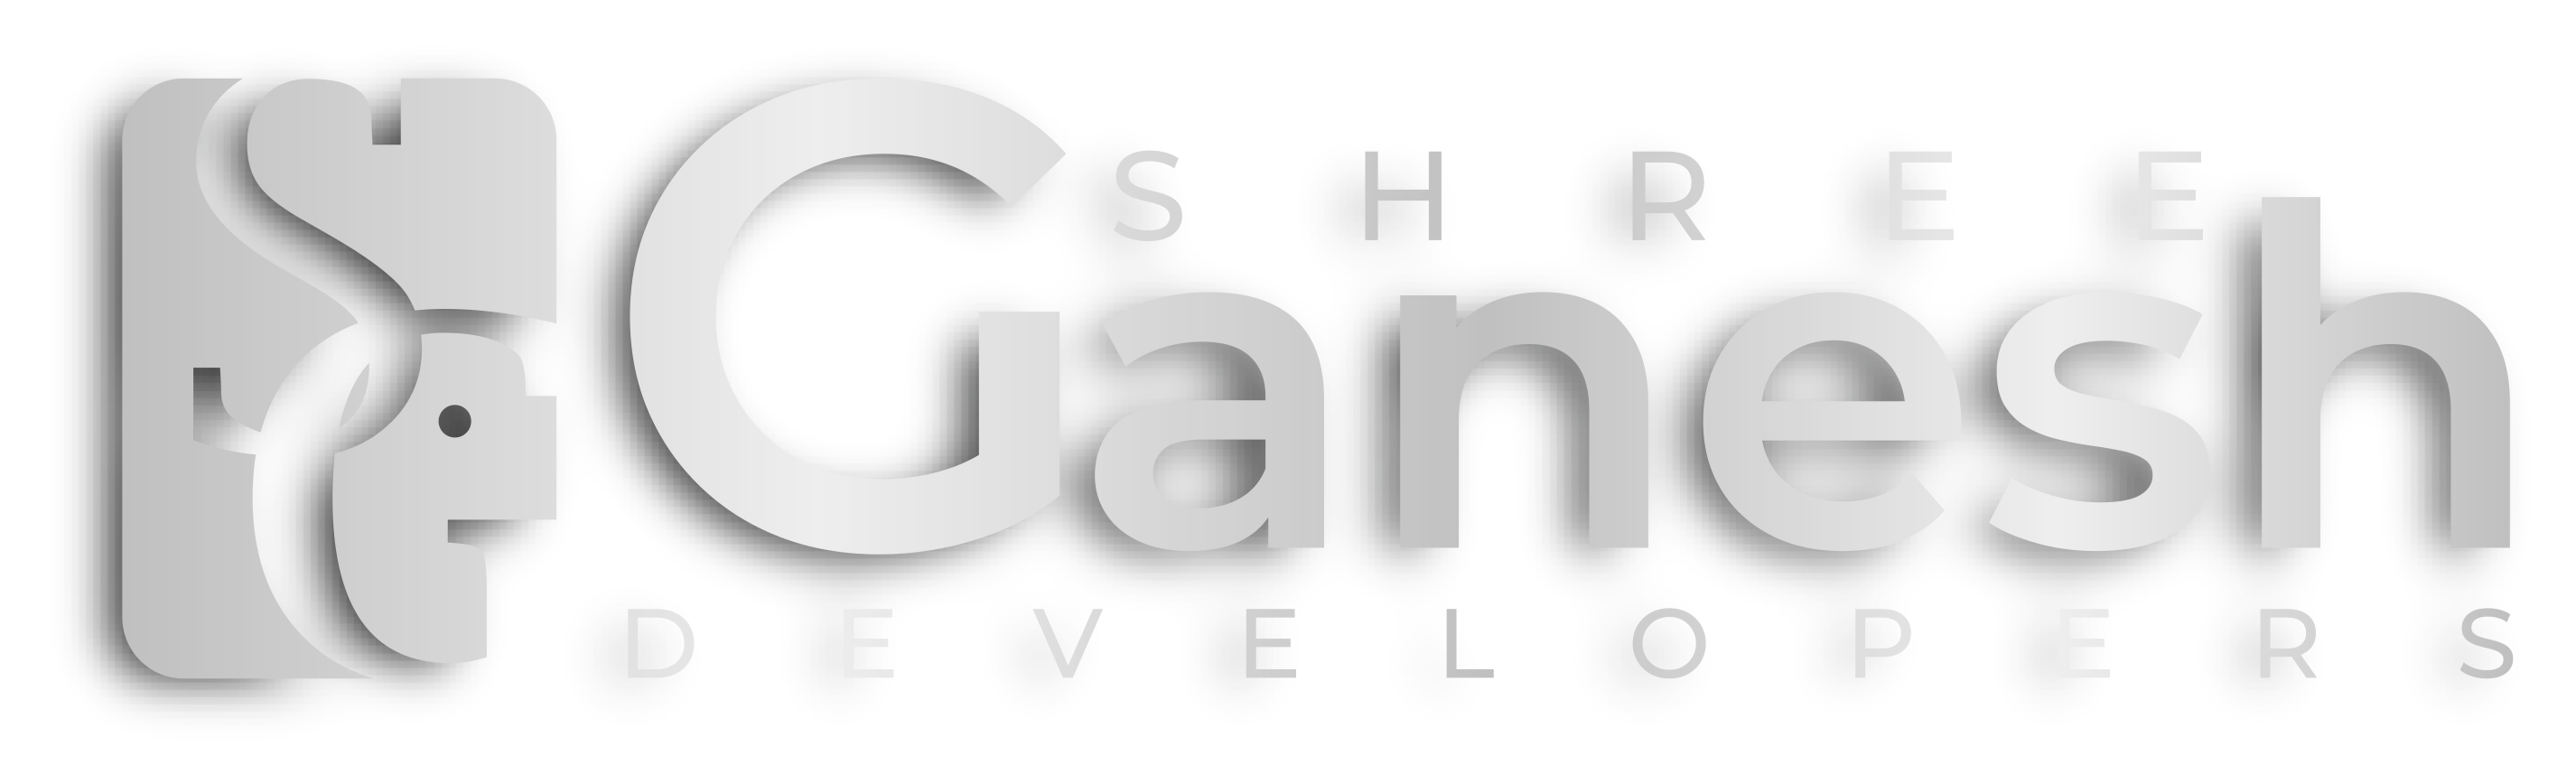 Shree Ganesh Developers